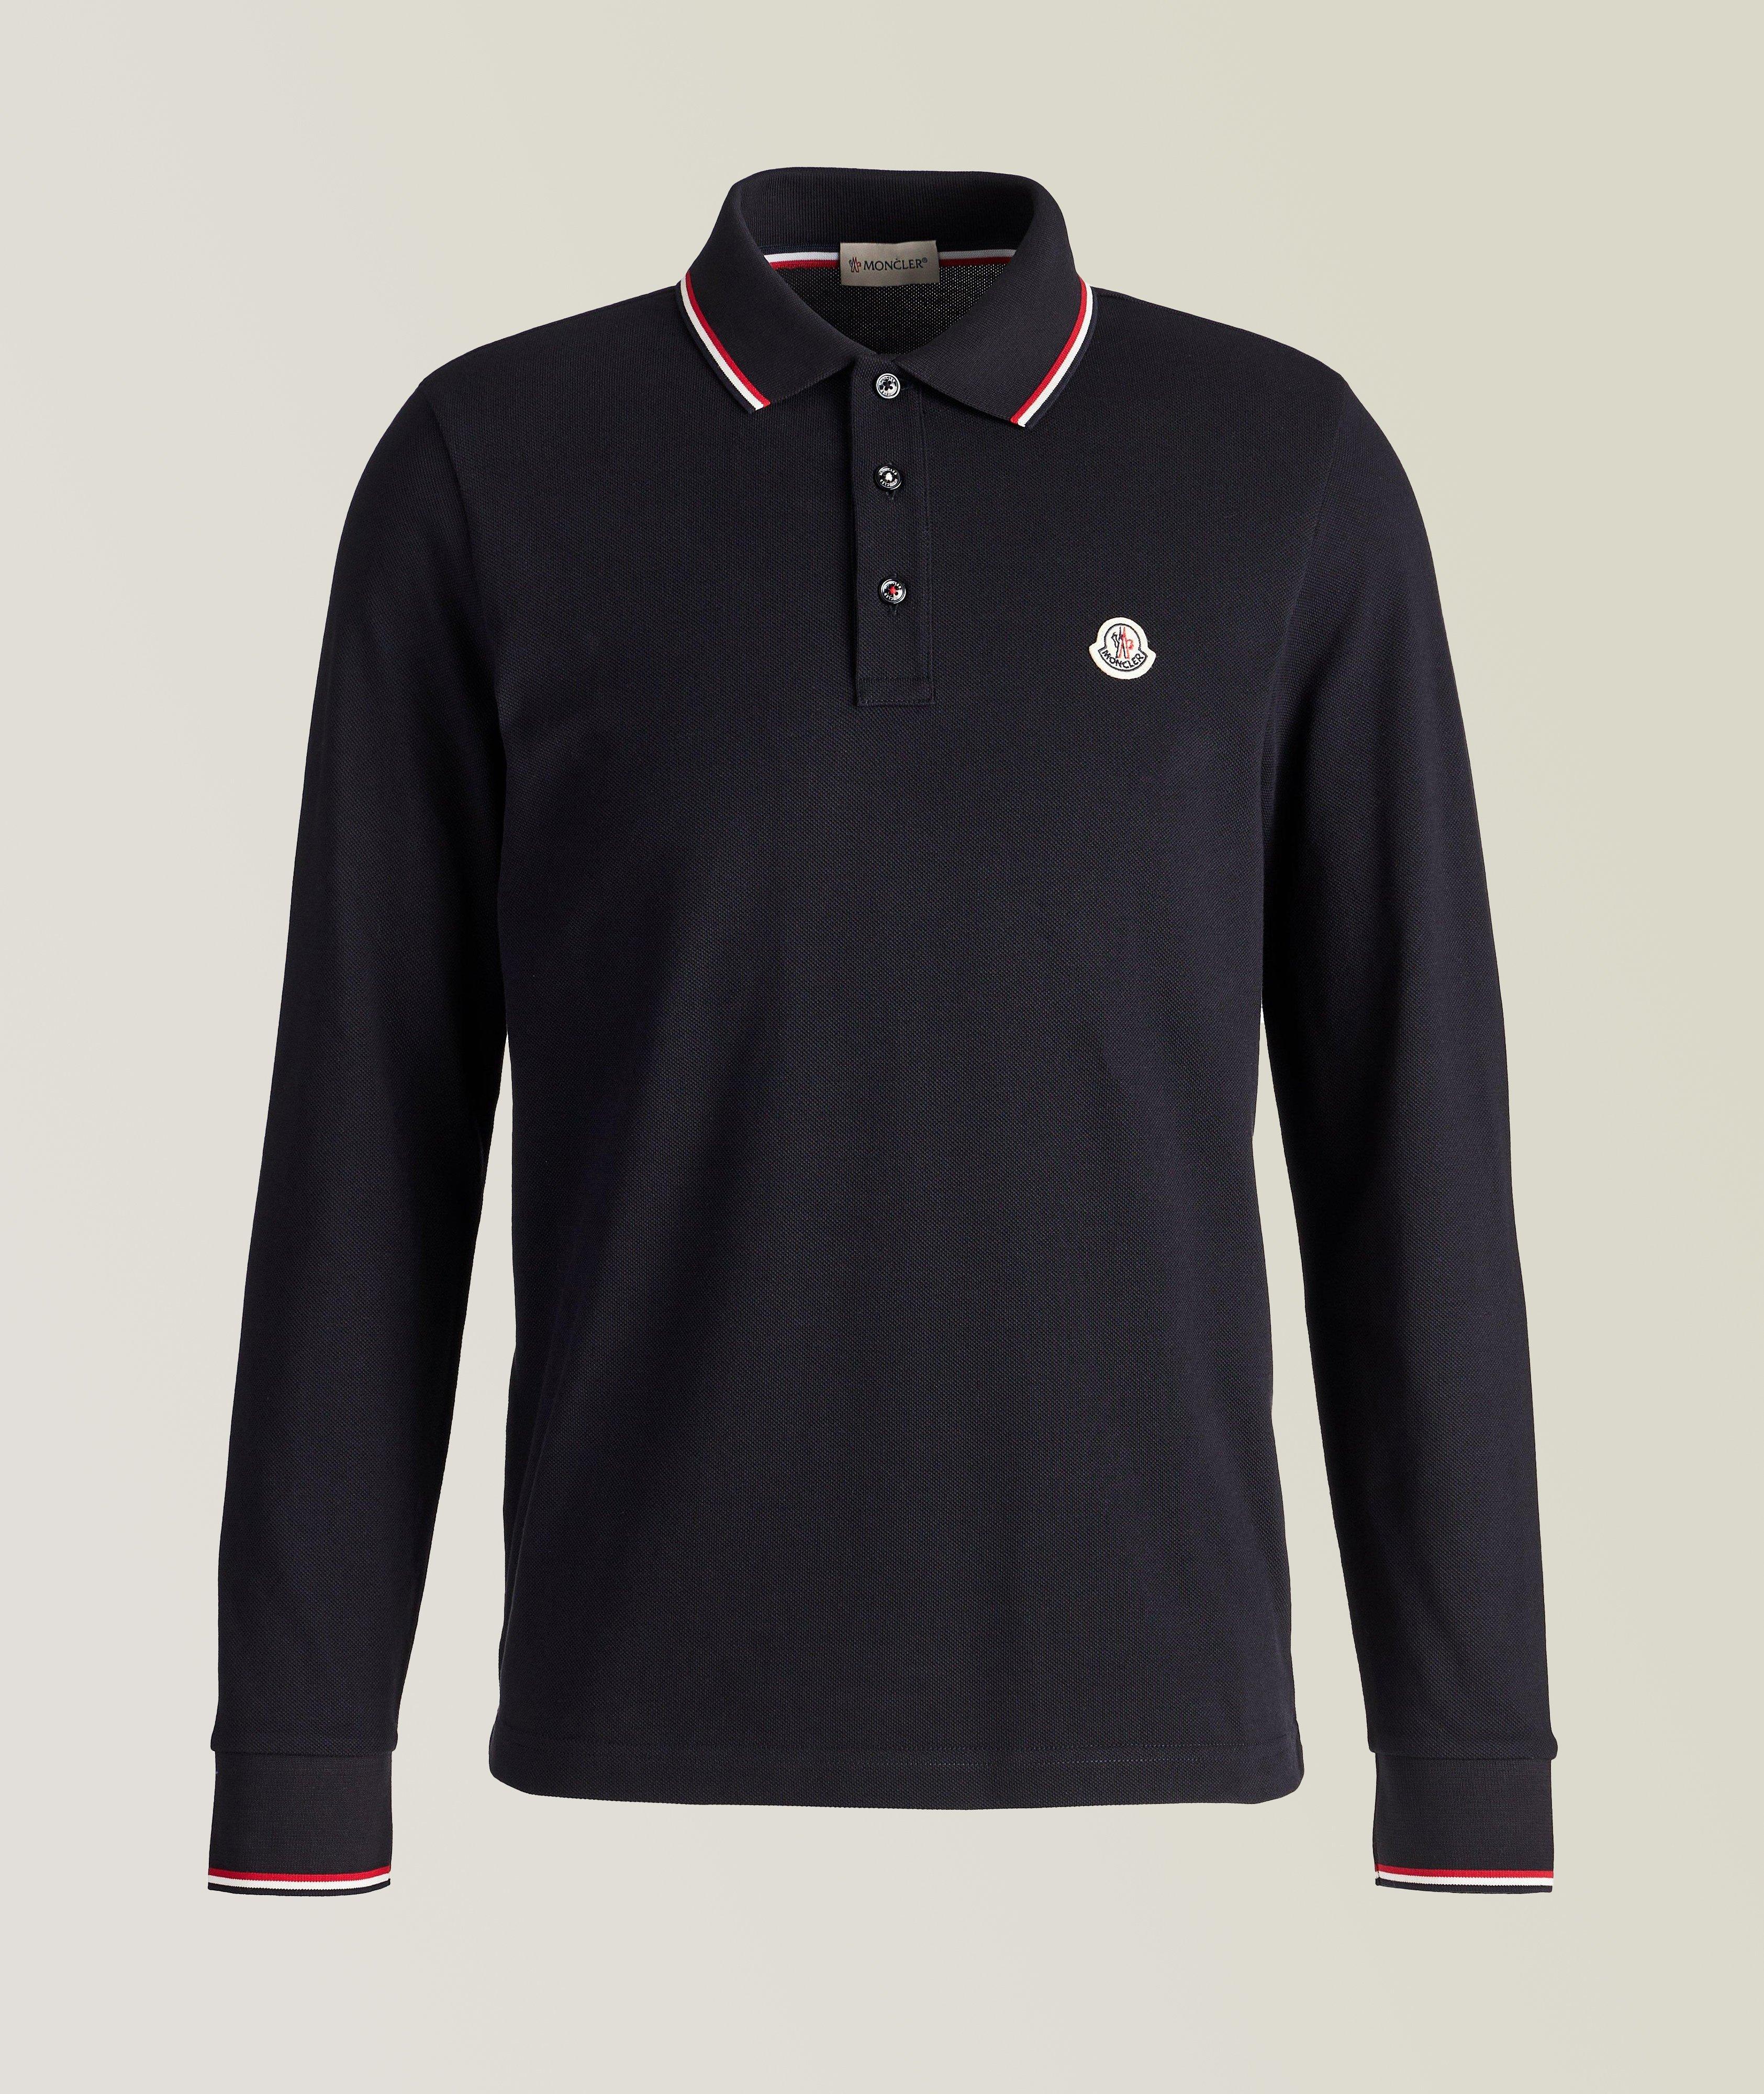 Moncler Long-Sleeve Piqué Cotton Polo | Sweaters & Knits | Harry Rosen